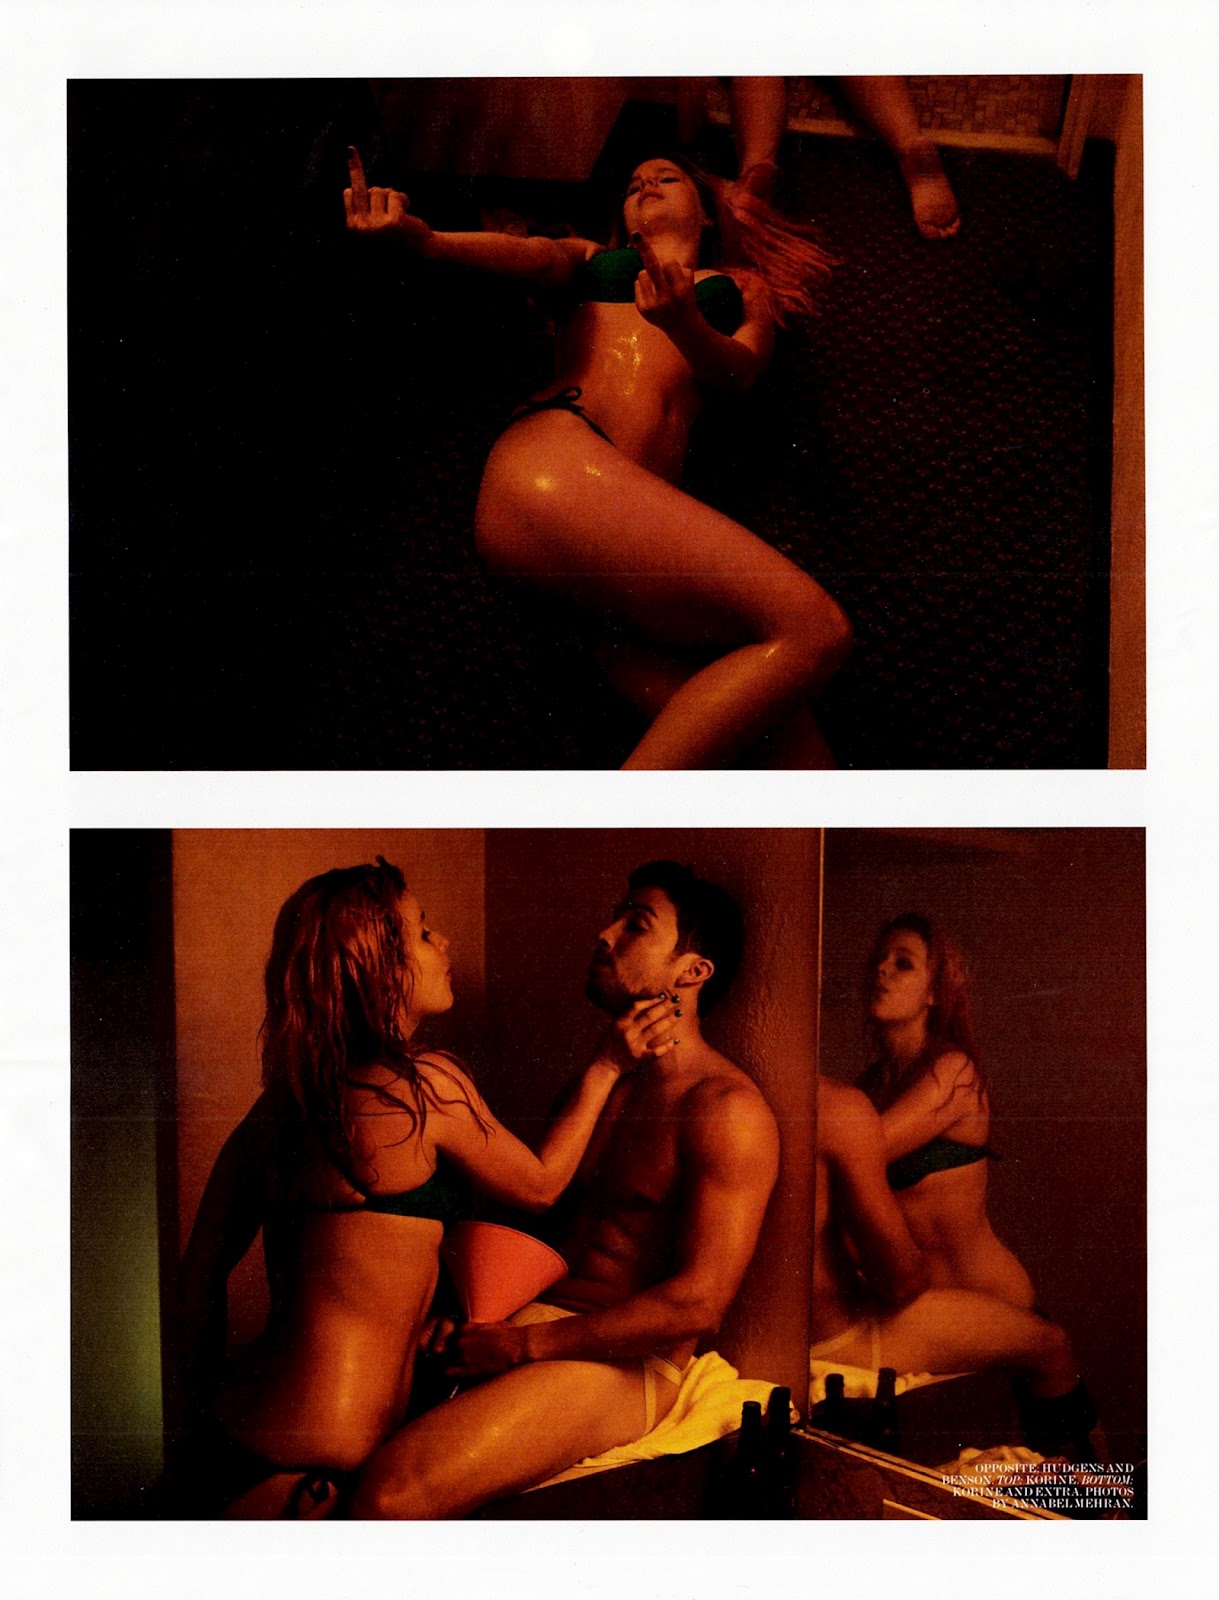 http://1.bp.blogspot.com/-hG2dZkm9-4A/UFSVkOtE3eI/AAAAAAAA-j0/5ZycWI6sDoY/s1600/Selena+Gomez+and+Vanessa+Hudgens+-+Bikini+for+Interview+Magazine-02.jpg